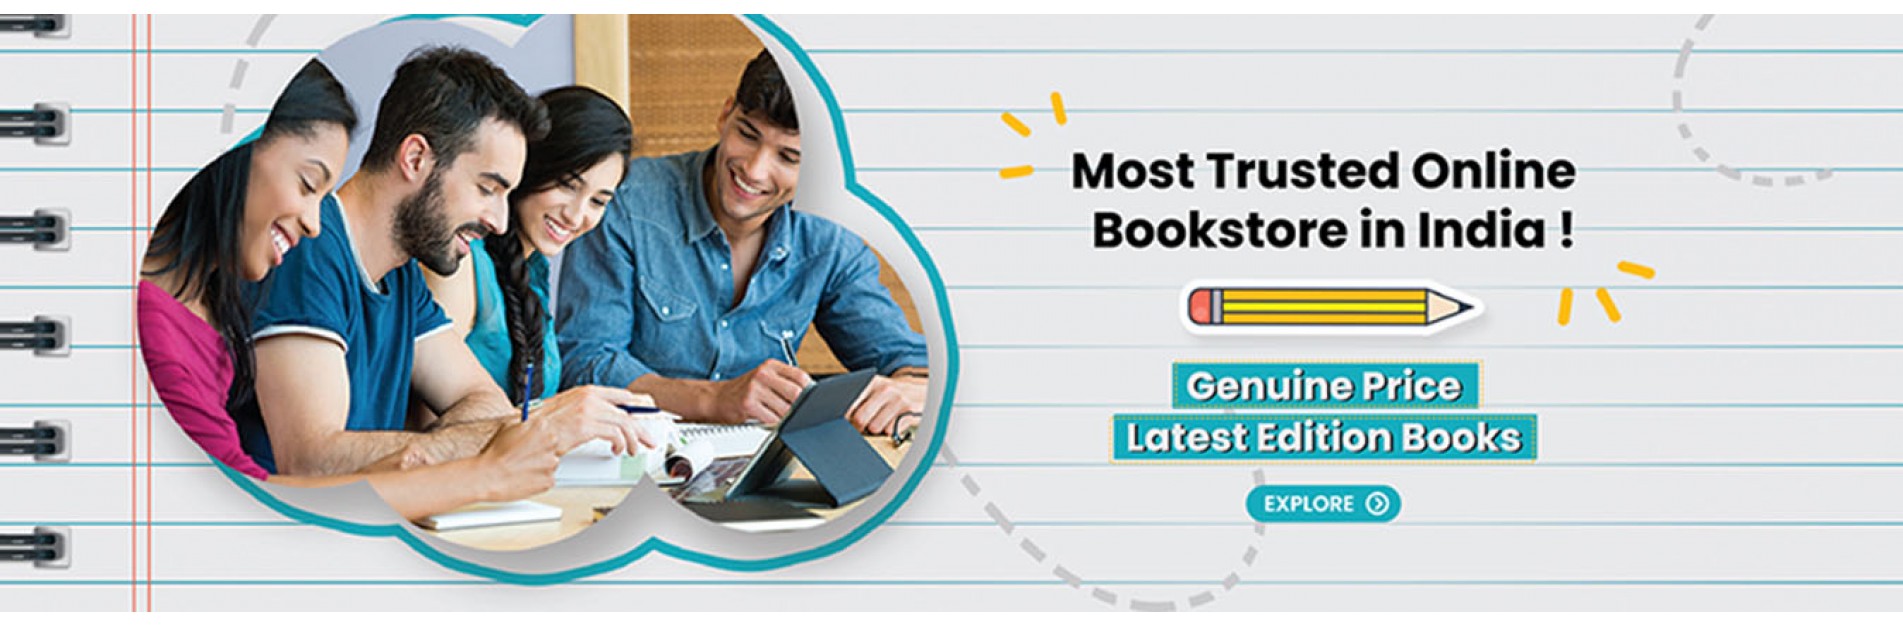 Most trusted online bookstore schoolchamp.net